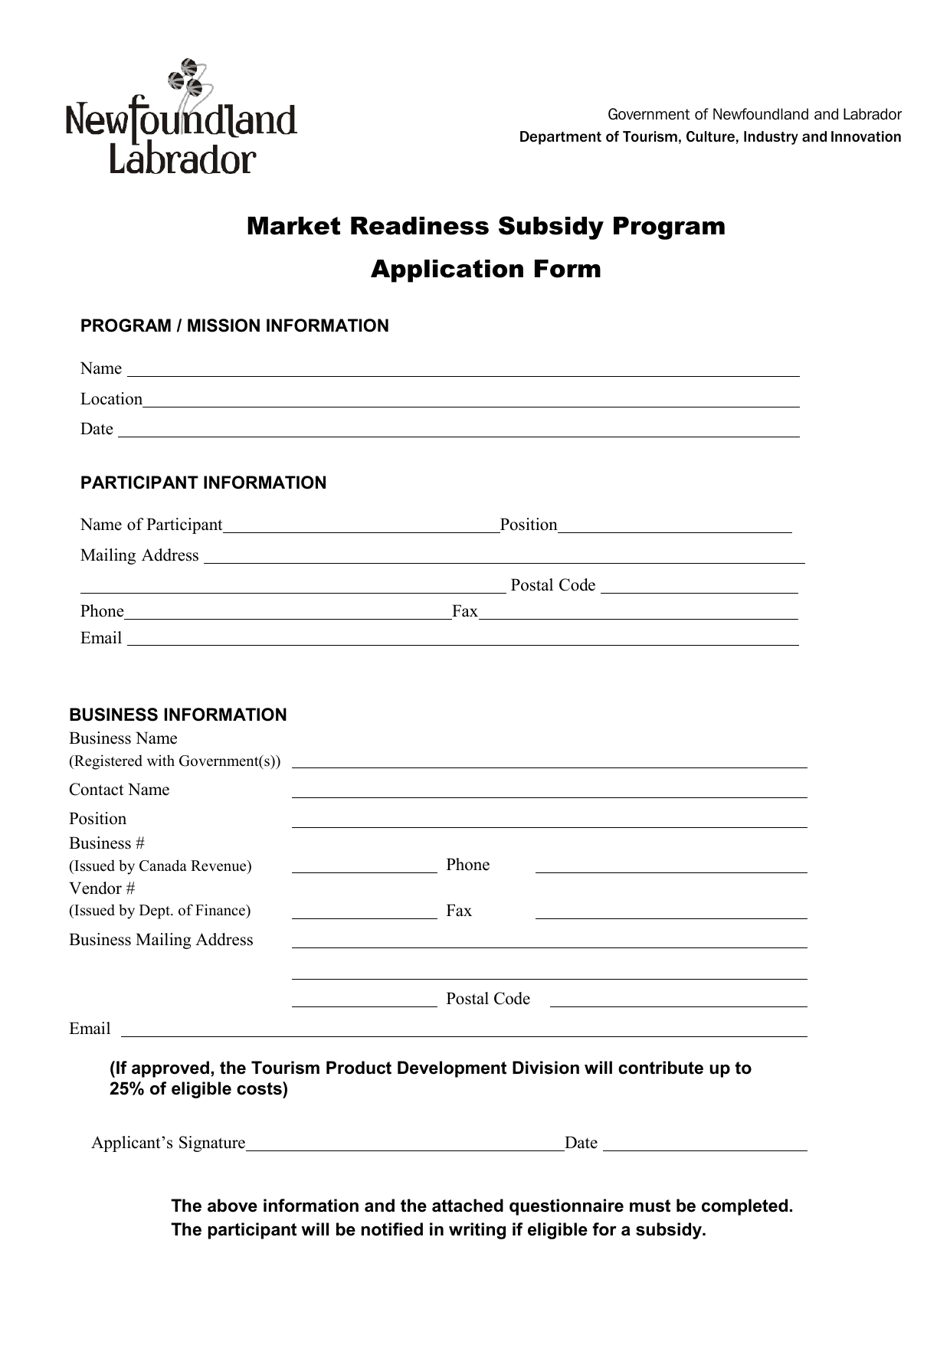 Market Readiness Subsidy Program Application Form - Newfoundland and Labrador, Canada, Page 1